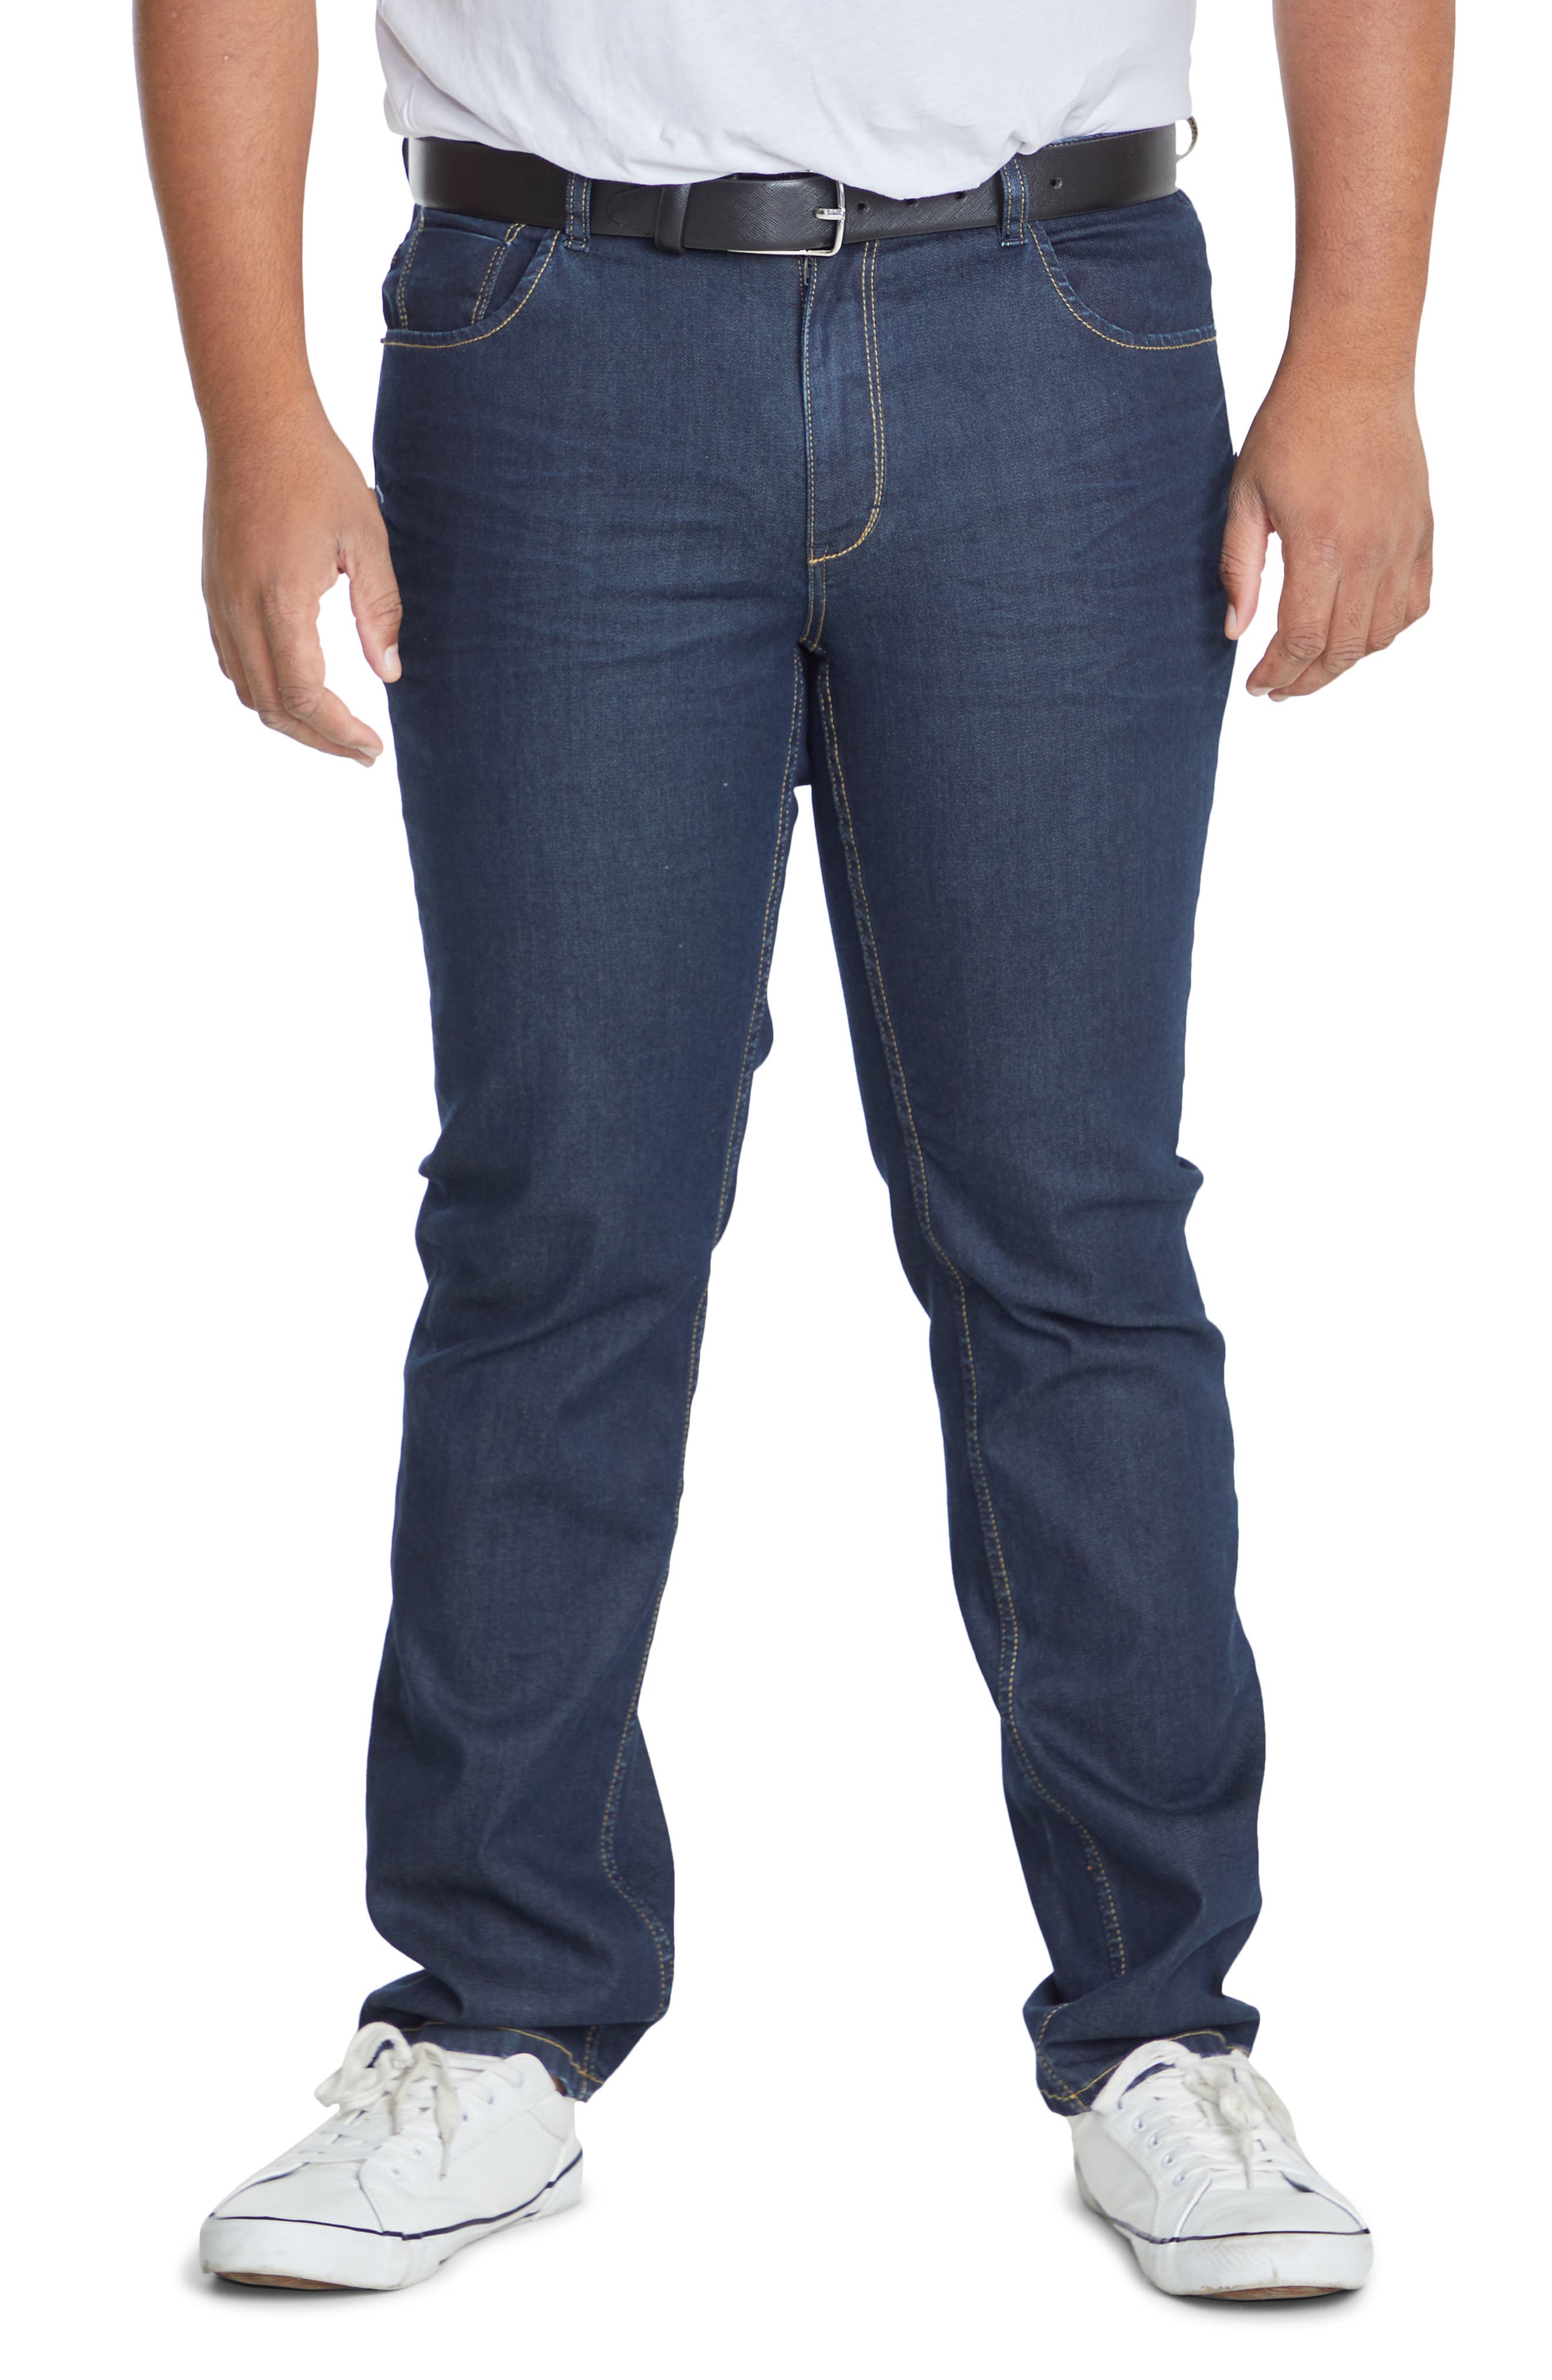 Johnny Bigg Hunter Superflex Slim Fit Jeans in Ink at Nordstrom